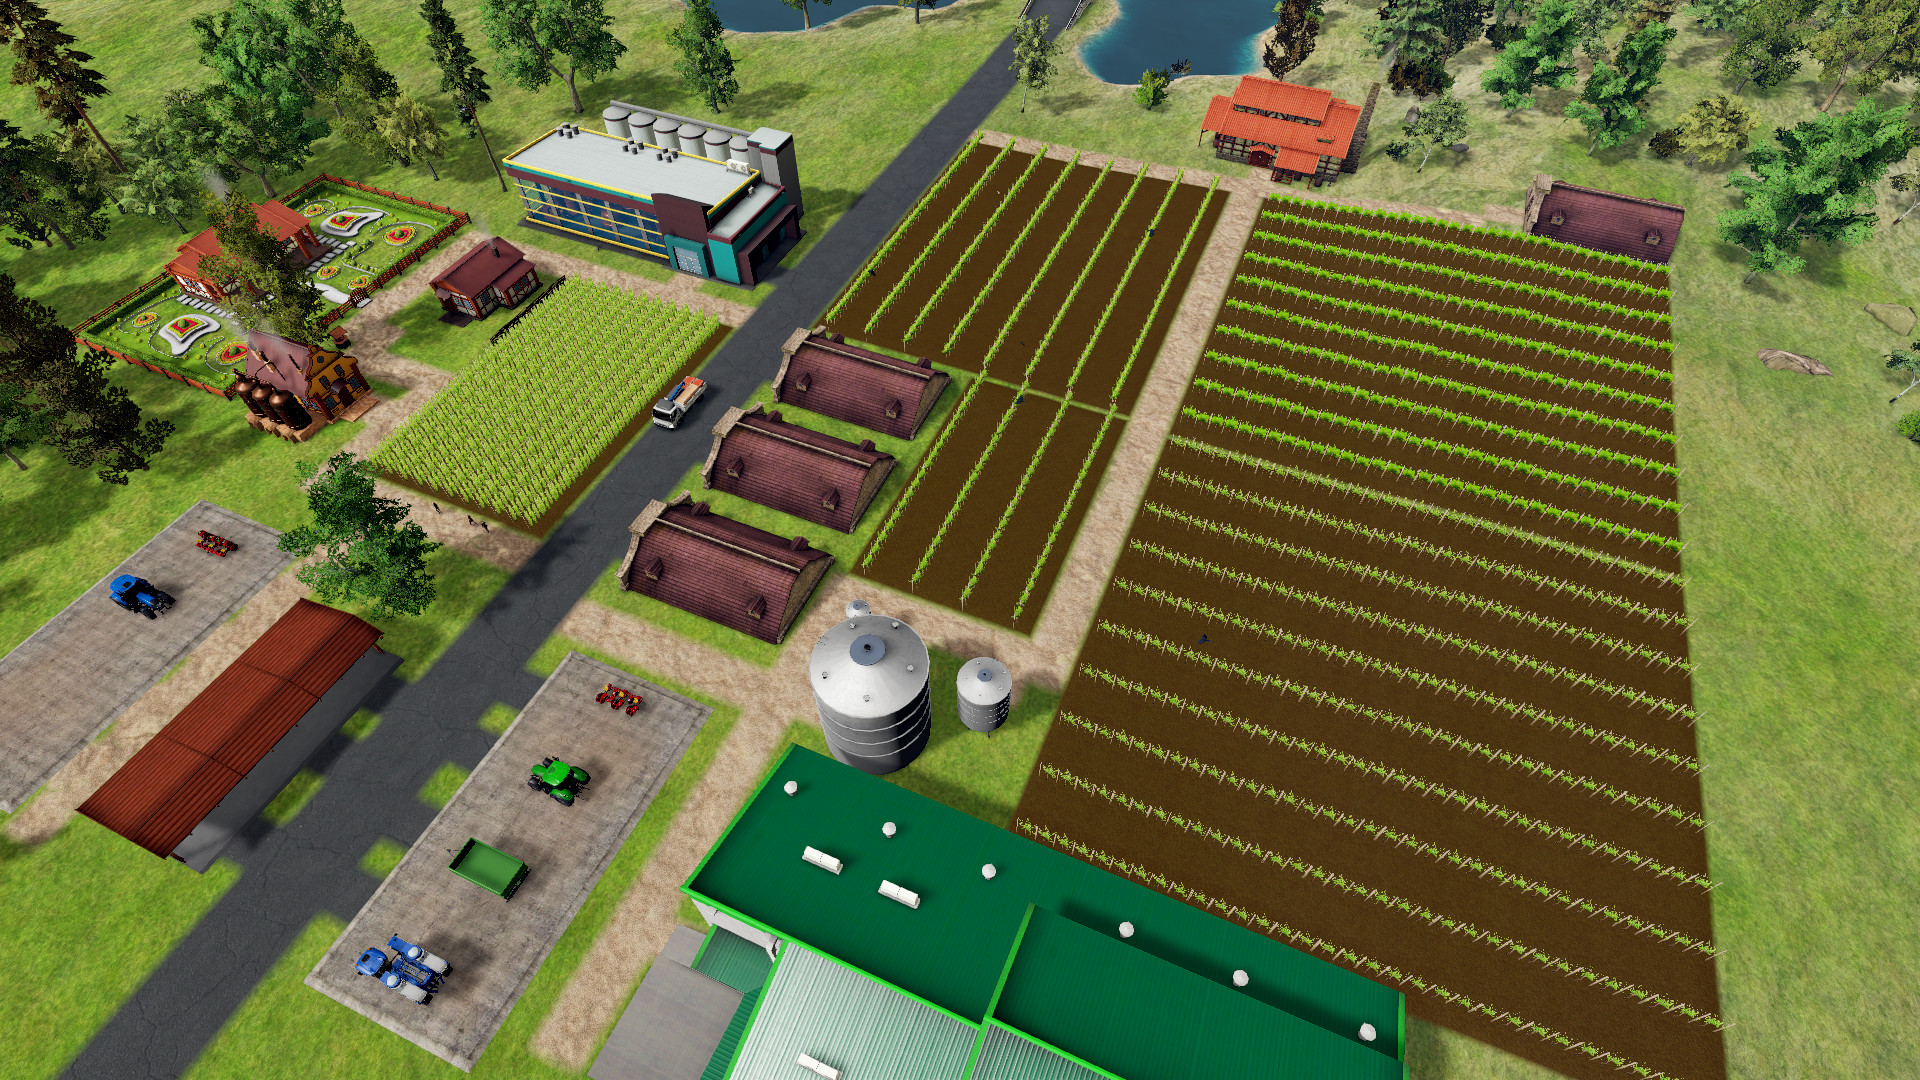 Farm Manager 2018 - Brewing & Winemaking DLC Featured Screenshot #1